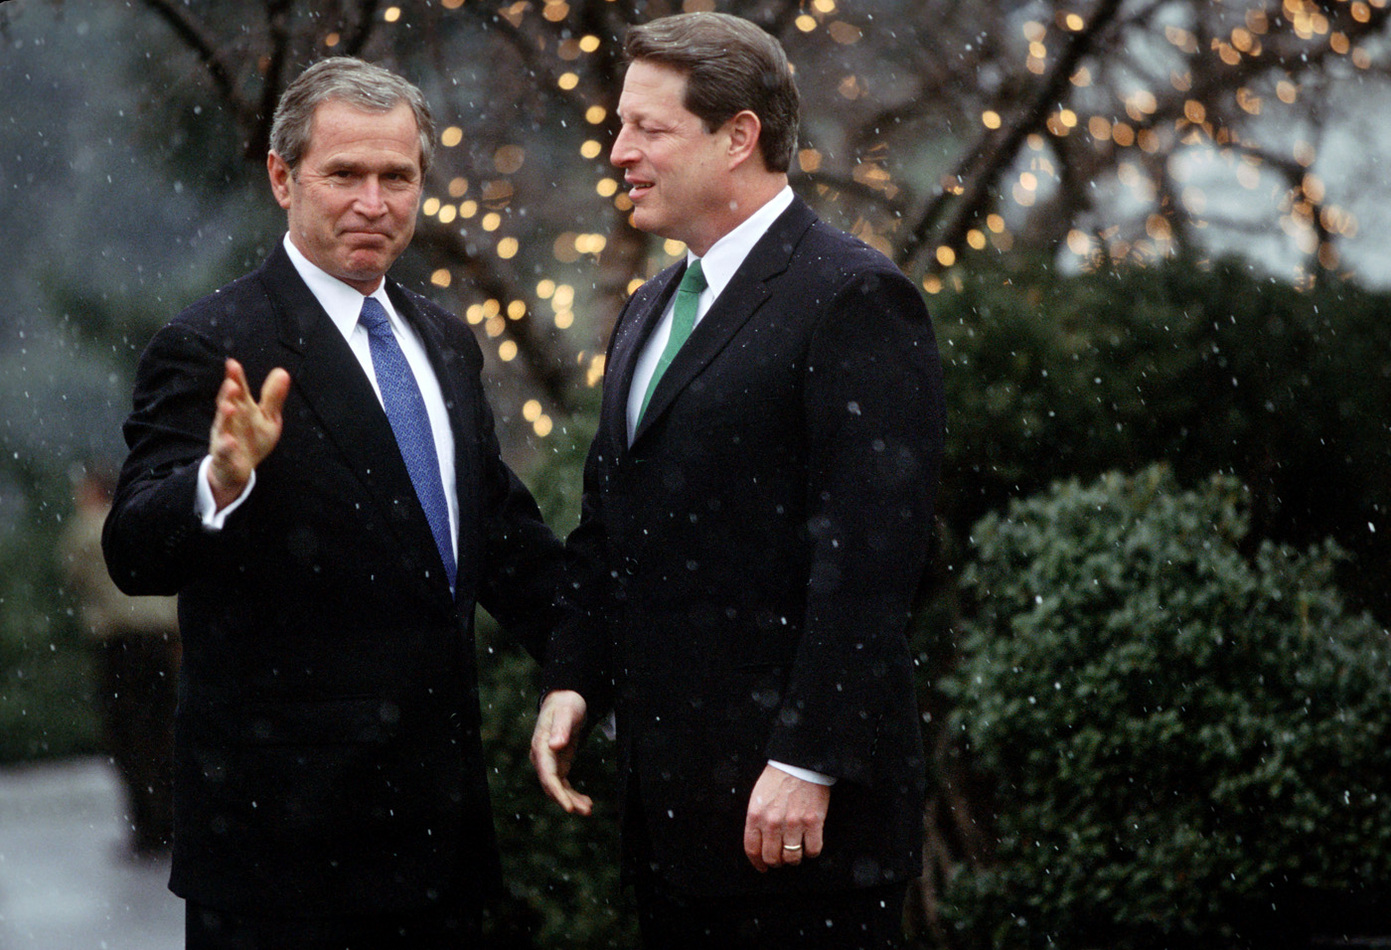 Bush admits Victory : The Presidents  : David Burnett | Photographer